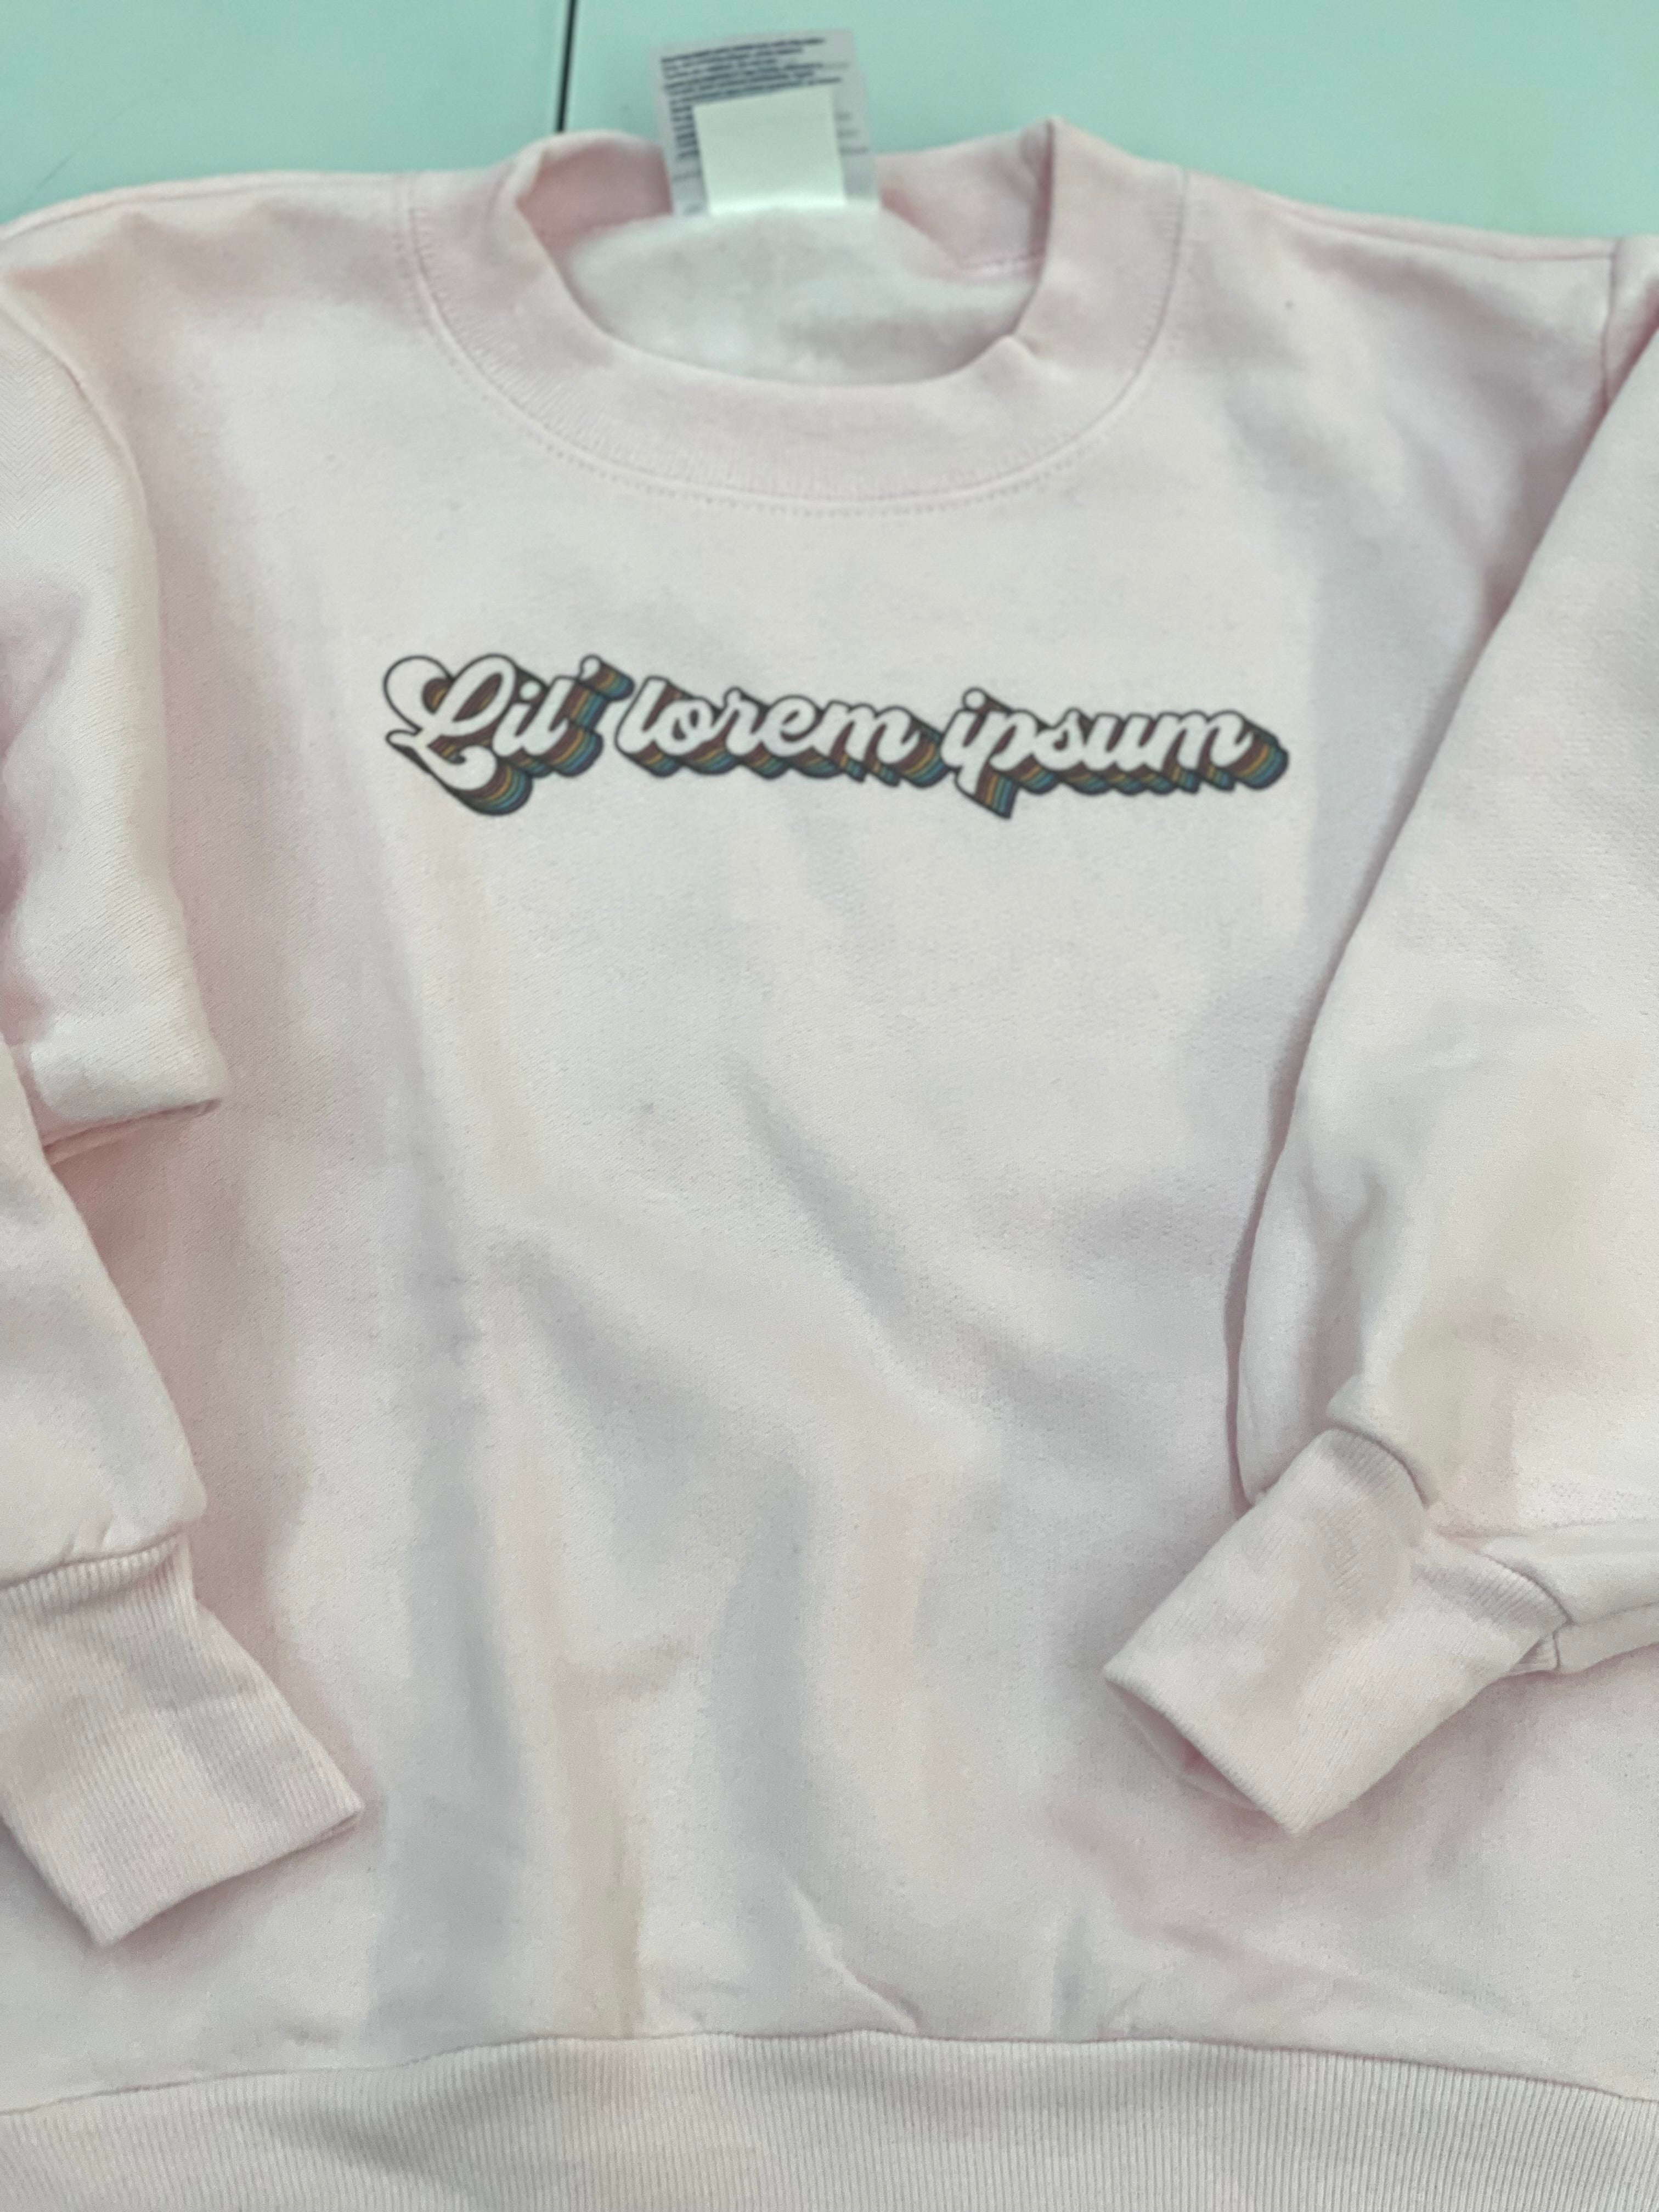 [Warehouse Sale] Sample 'Lil Lorem Ipsum Youth -Pink Sweatshirts